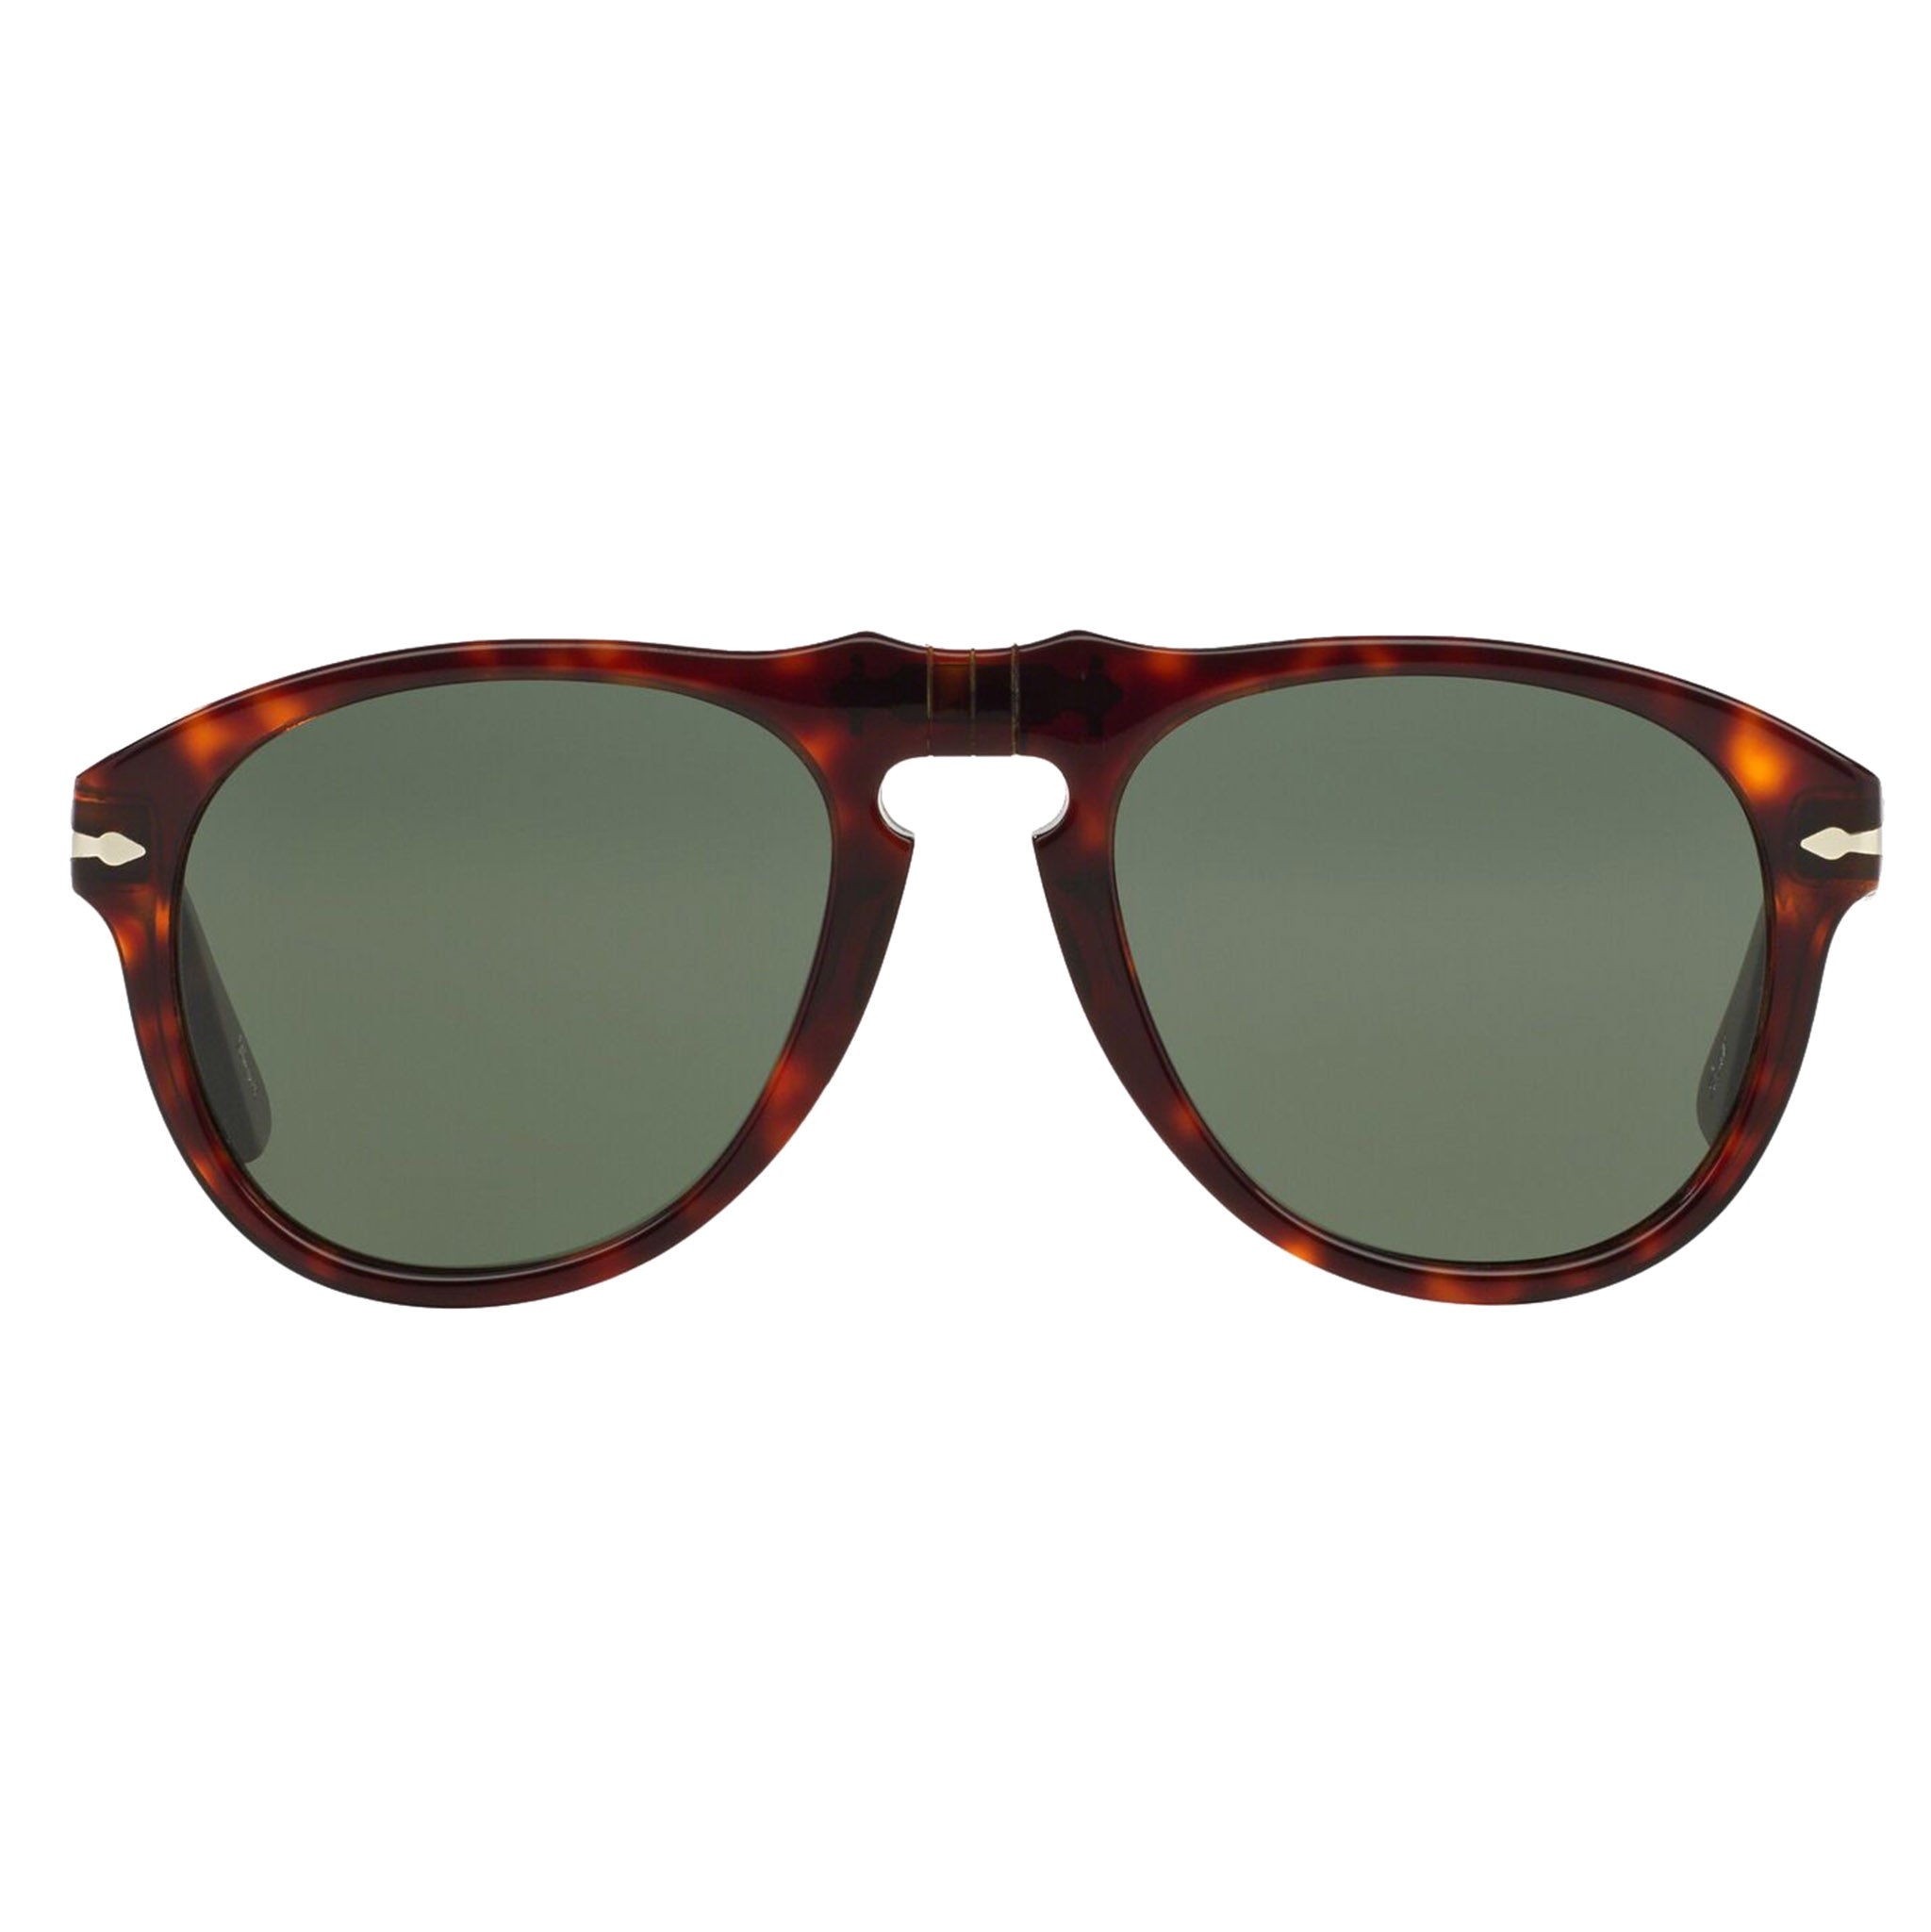 Persol 649 Havana Polarized Green Sunglasses